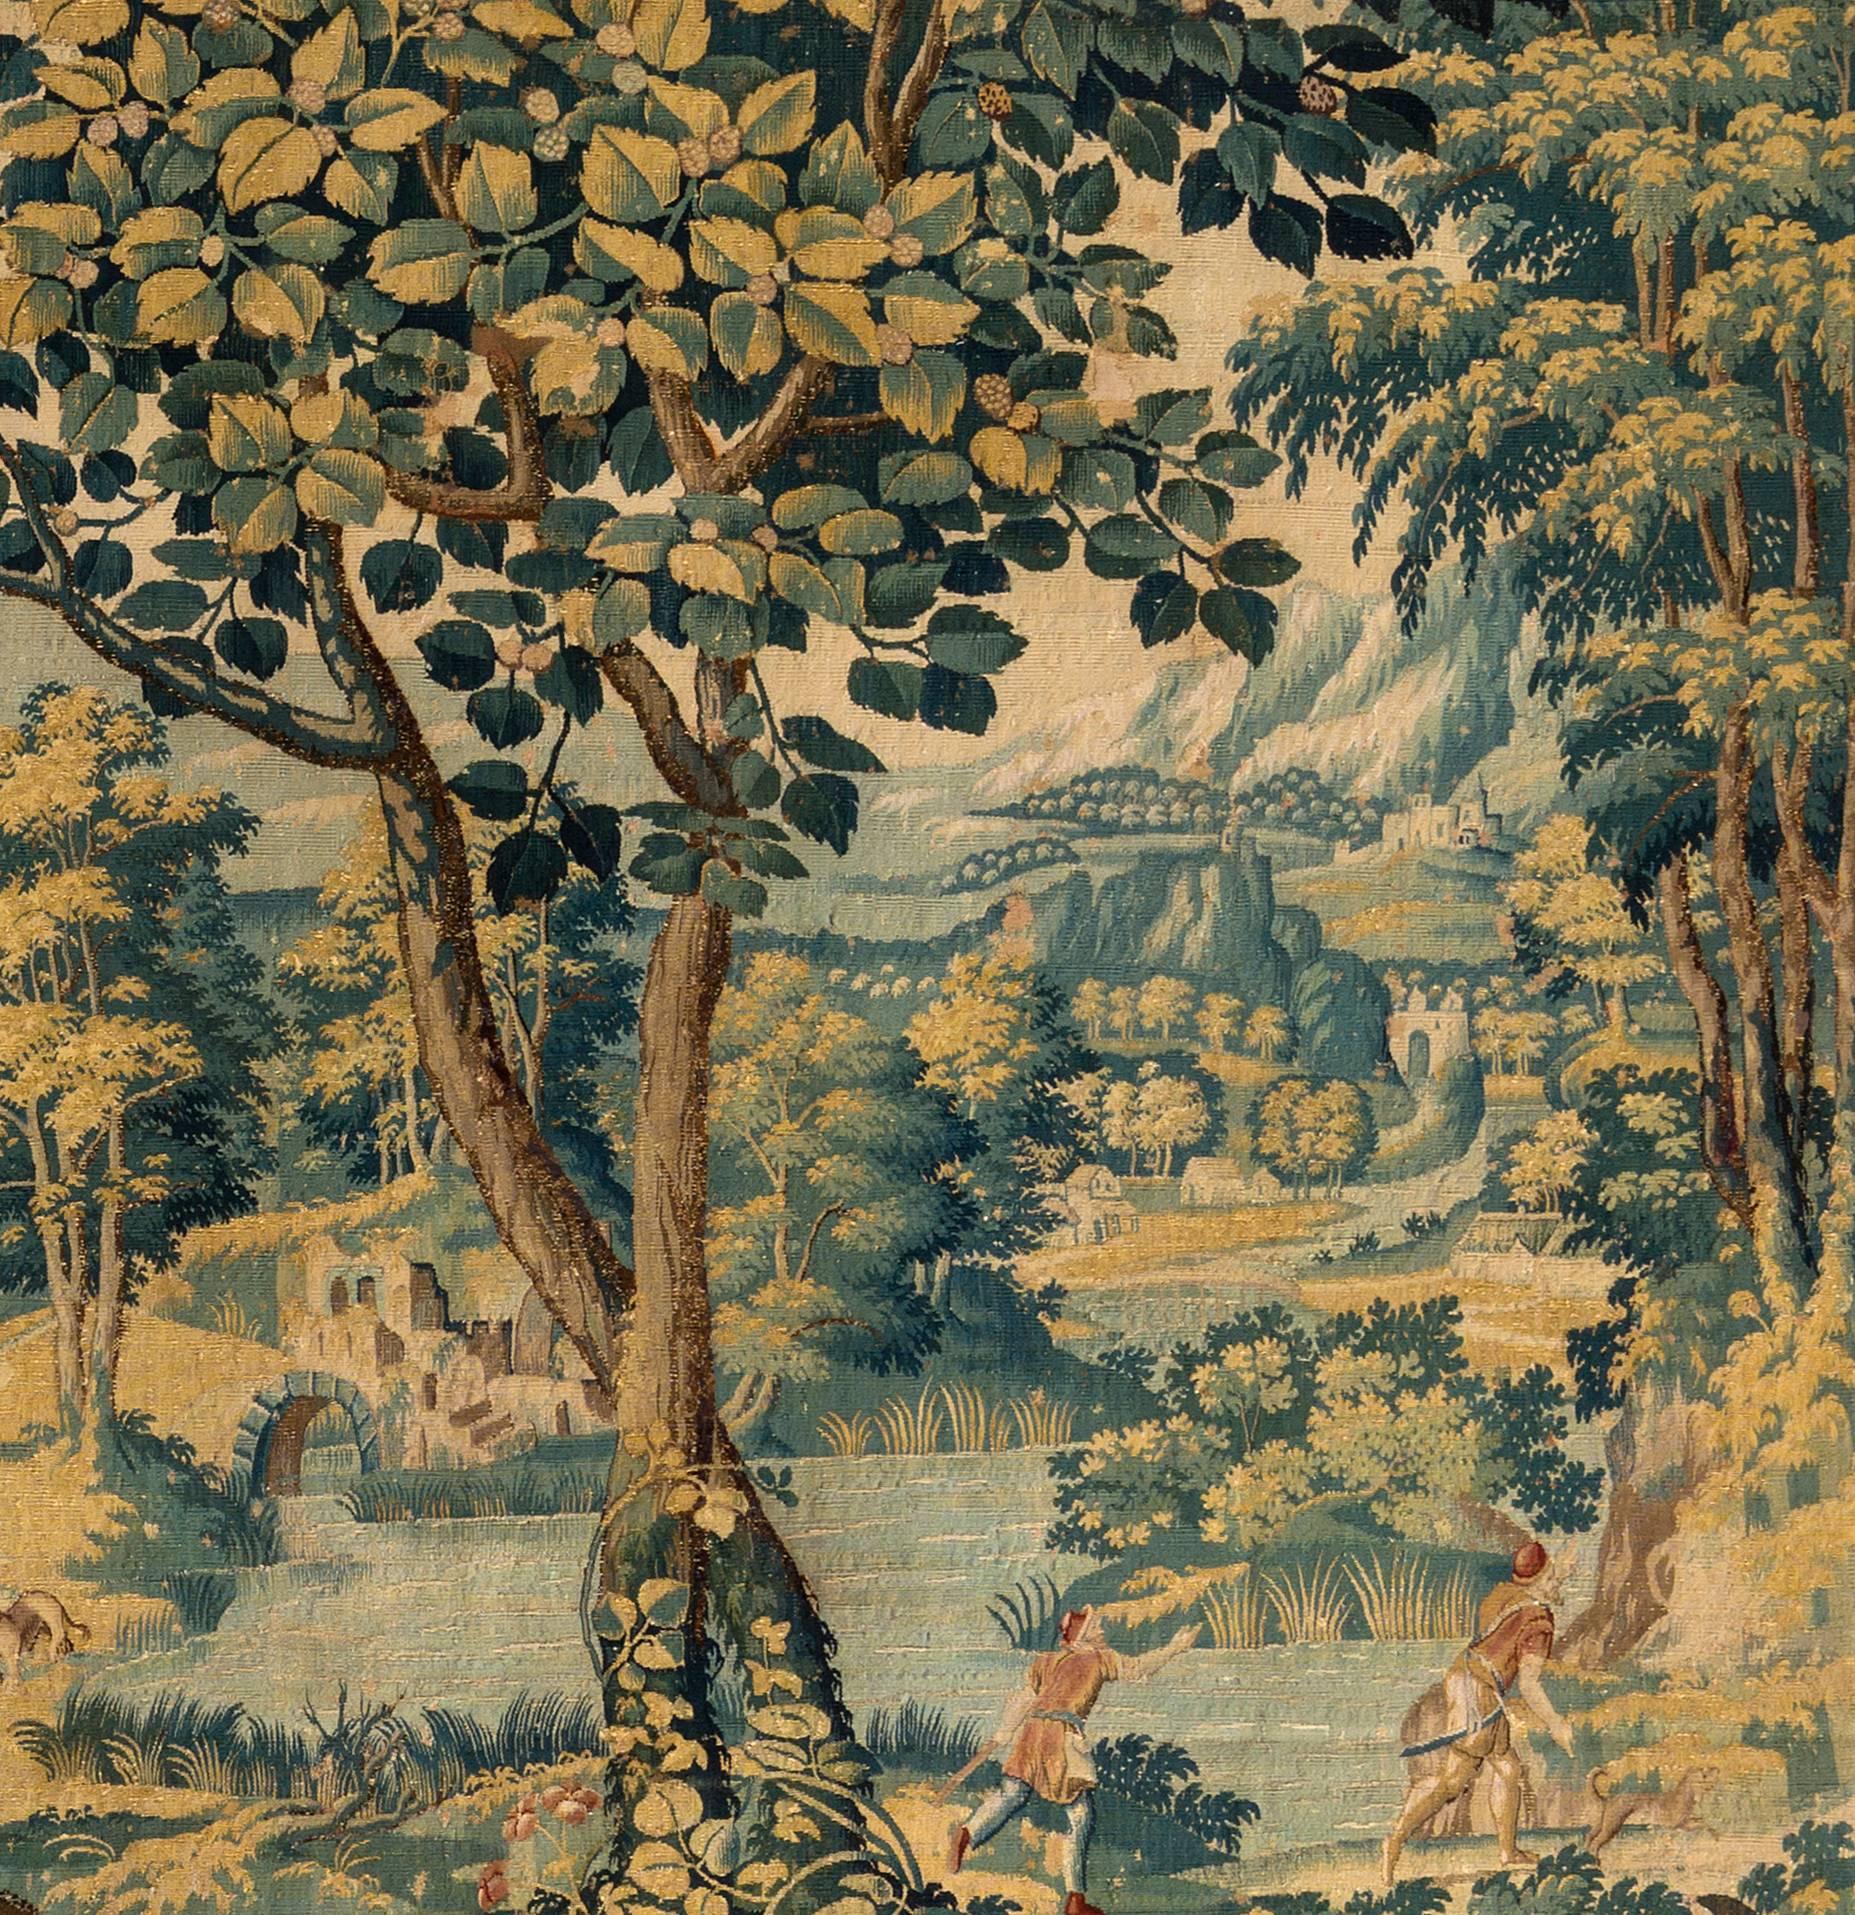 16th century tapestry